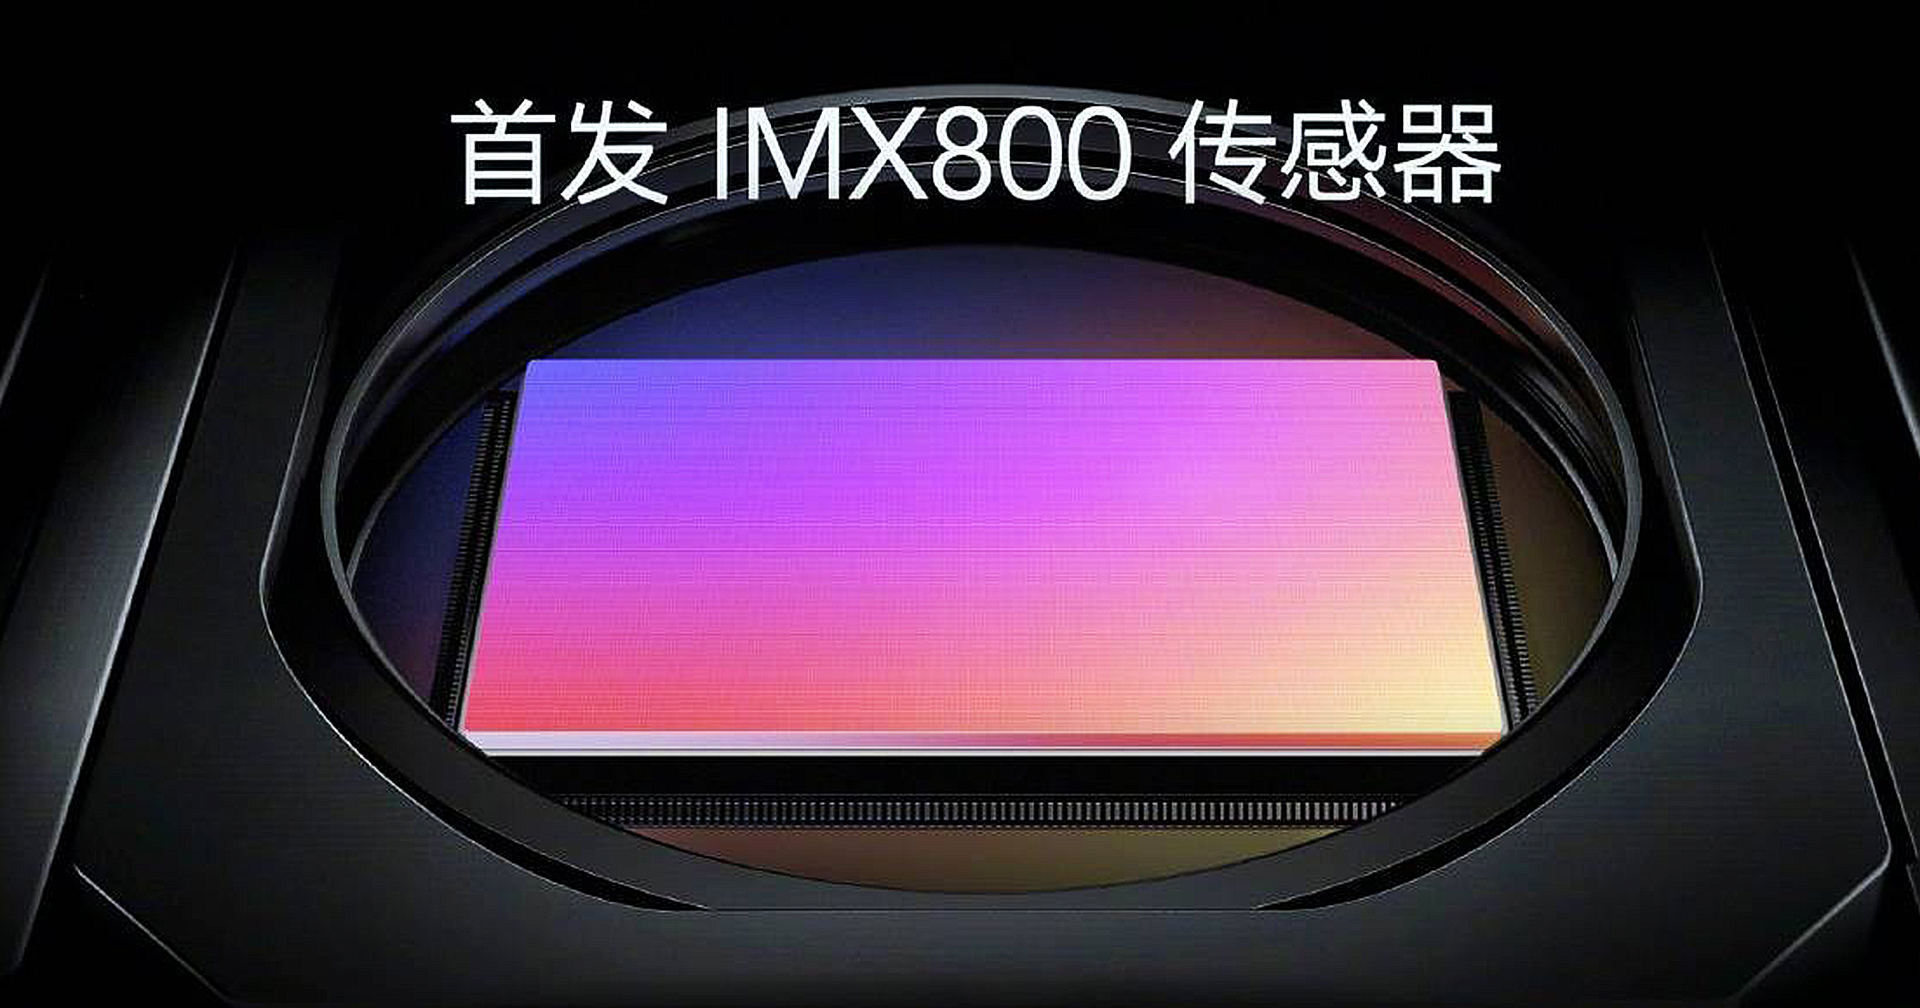 Sony เผยรายละเอียดเซนเซอร์ภาพ IMX800 ความละเอียด 54 MP